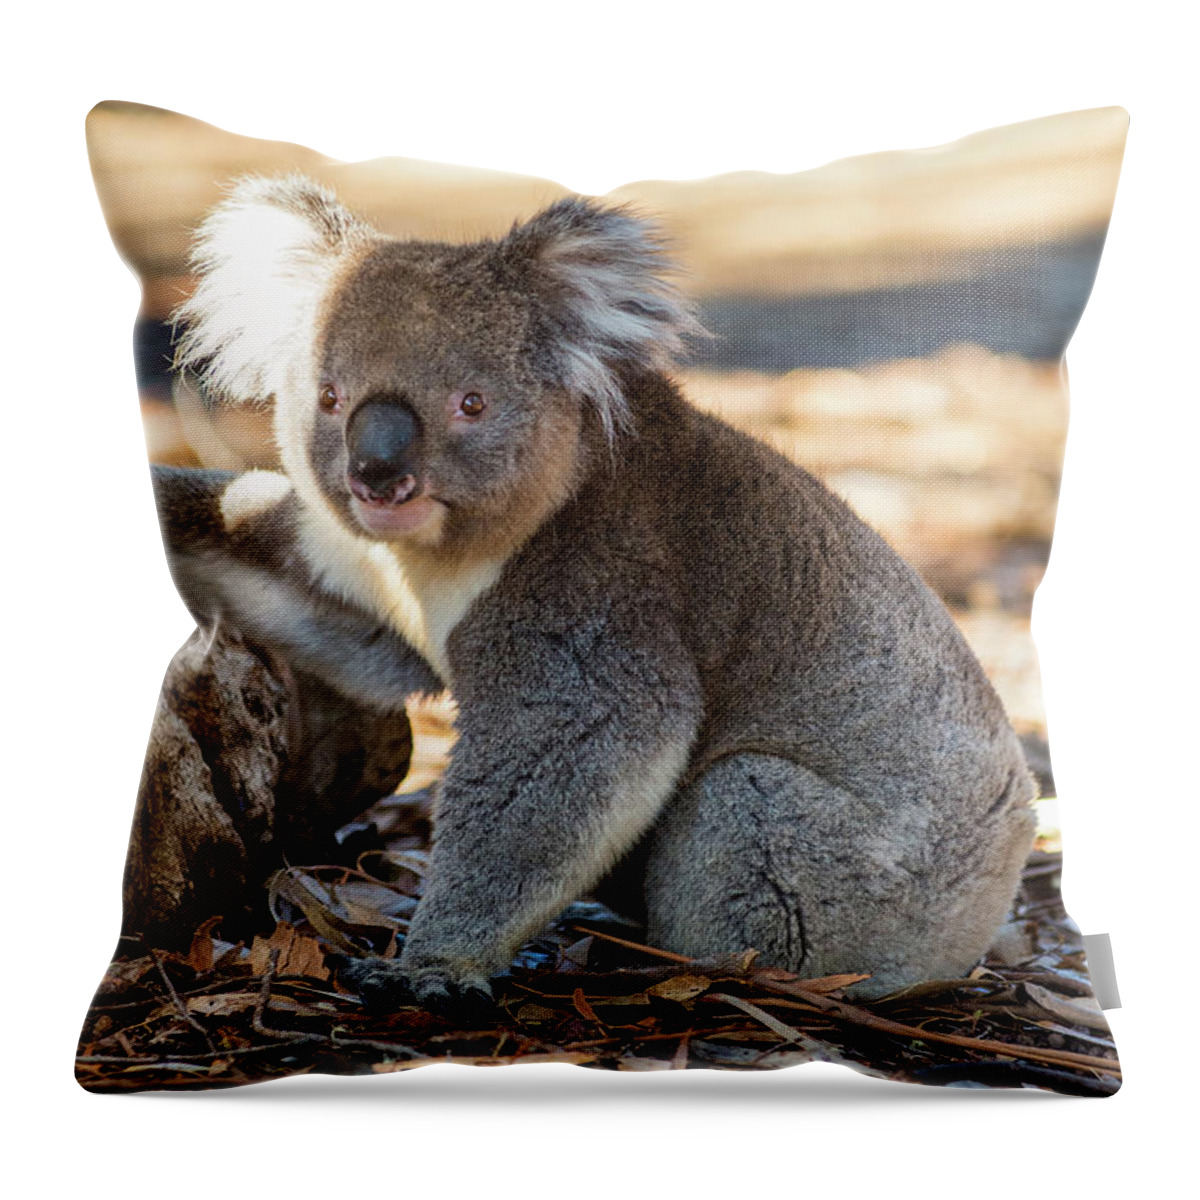 Koala Throw Pillow featuring the photograph Koala by Andrew Michael